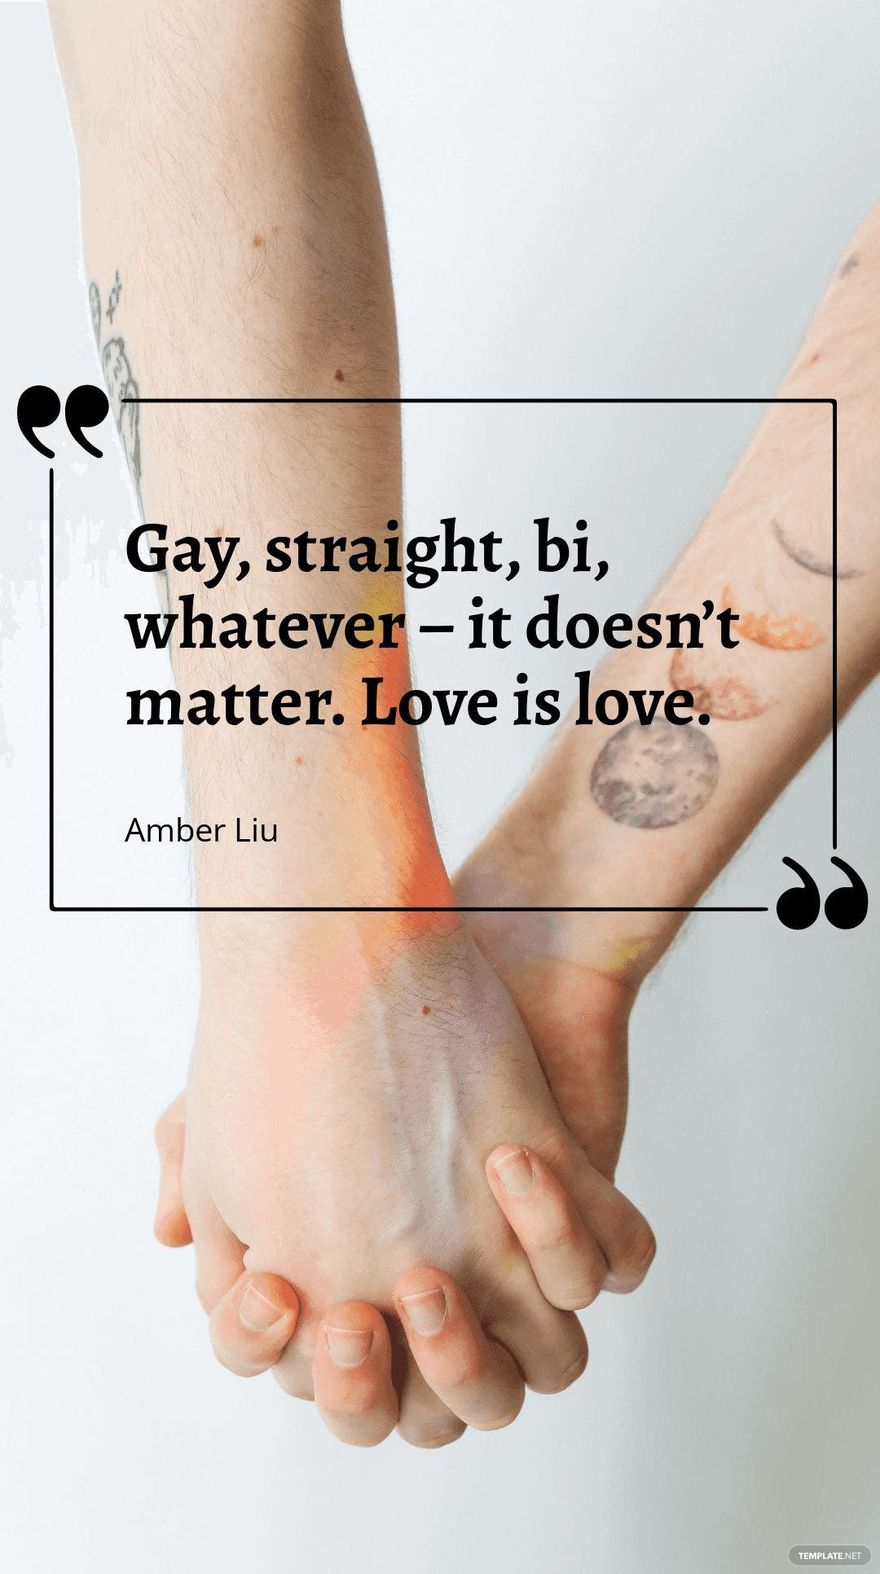 Amber Liu - Gay, straight, bi, whatever – it doesn’t matter. Love is love.